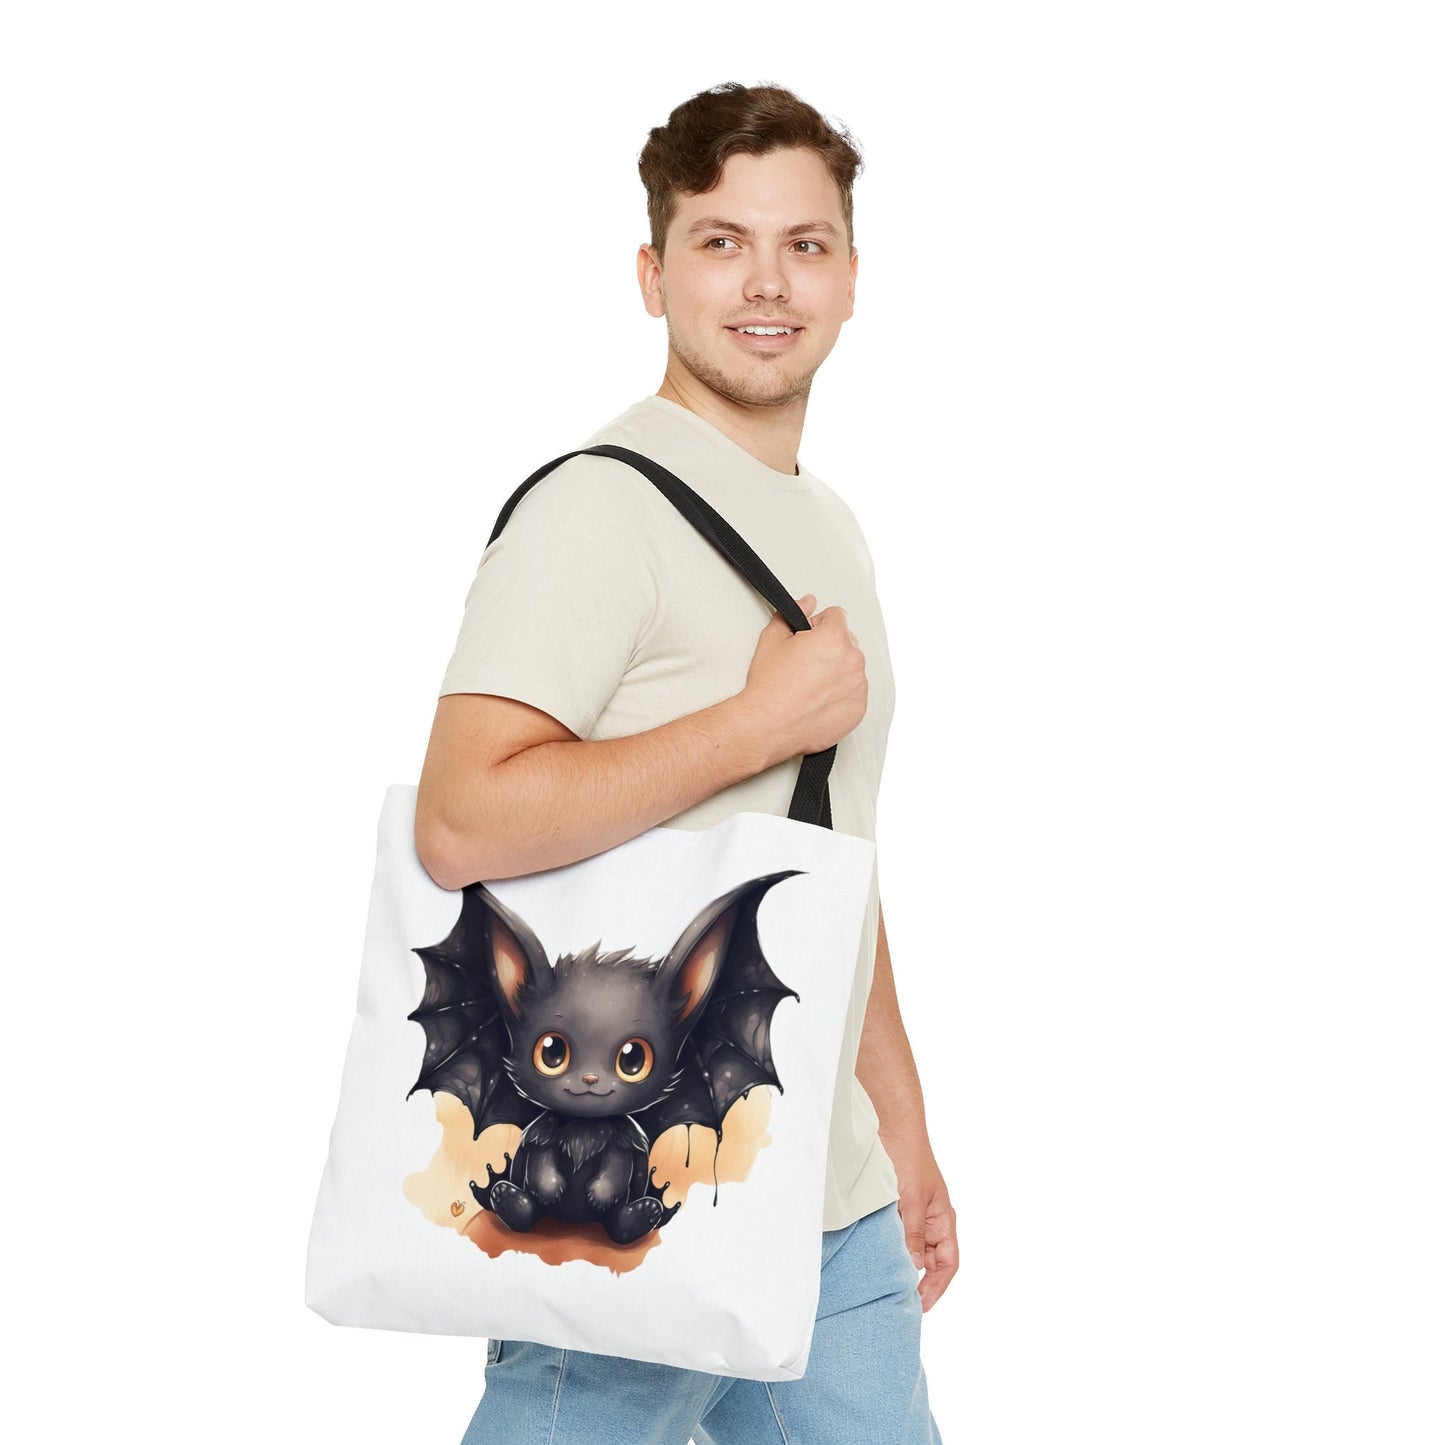 Adorable Tote bag with cute Bat, Bat Tote bag for any Occasion, Cute Bat Tote bag perfect for Halloween, Men's, Womens, Kids Tote bag